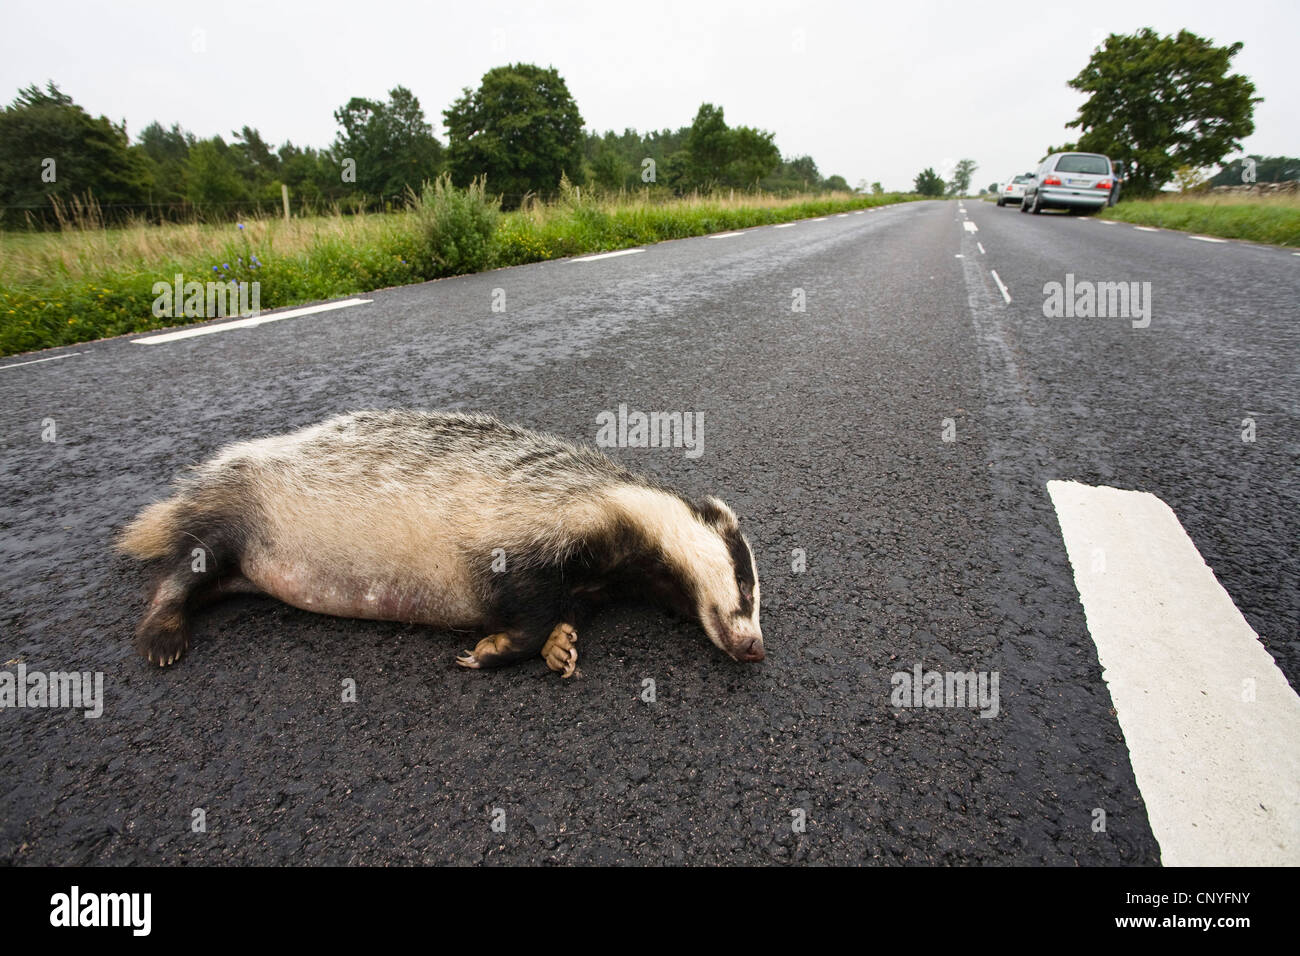 Old World badger, Eurasian badger (Meles meles), animal run over on a country road, Sweden, Smaland Stock Photo